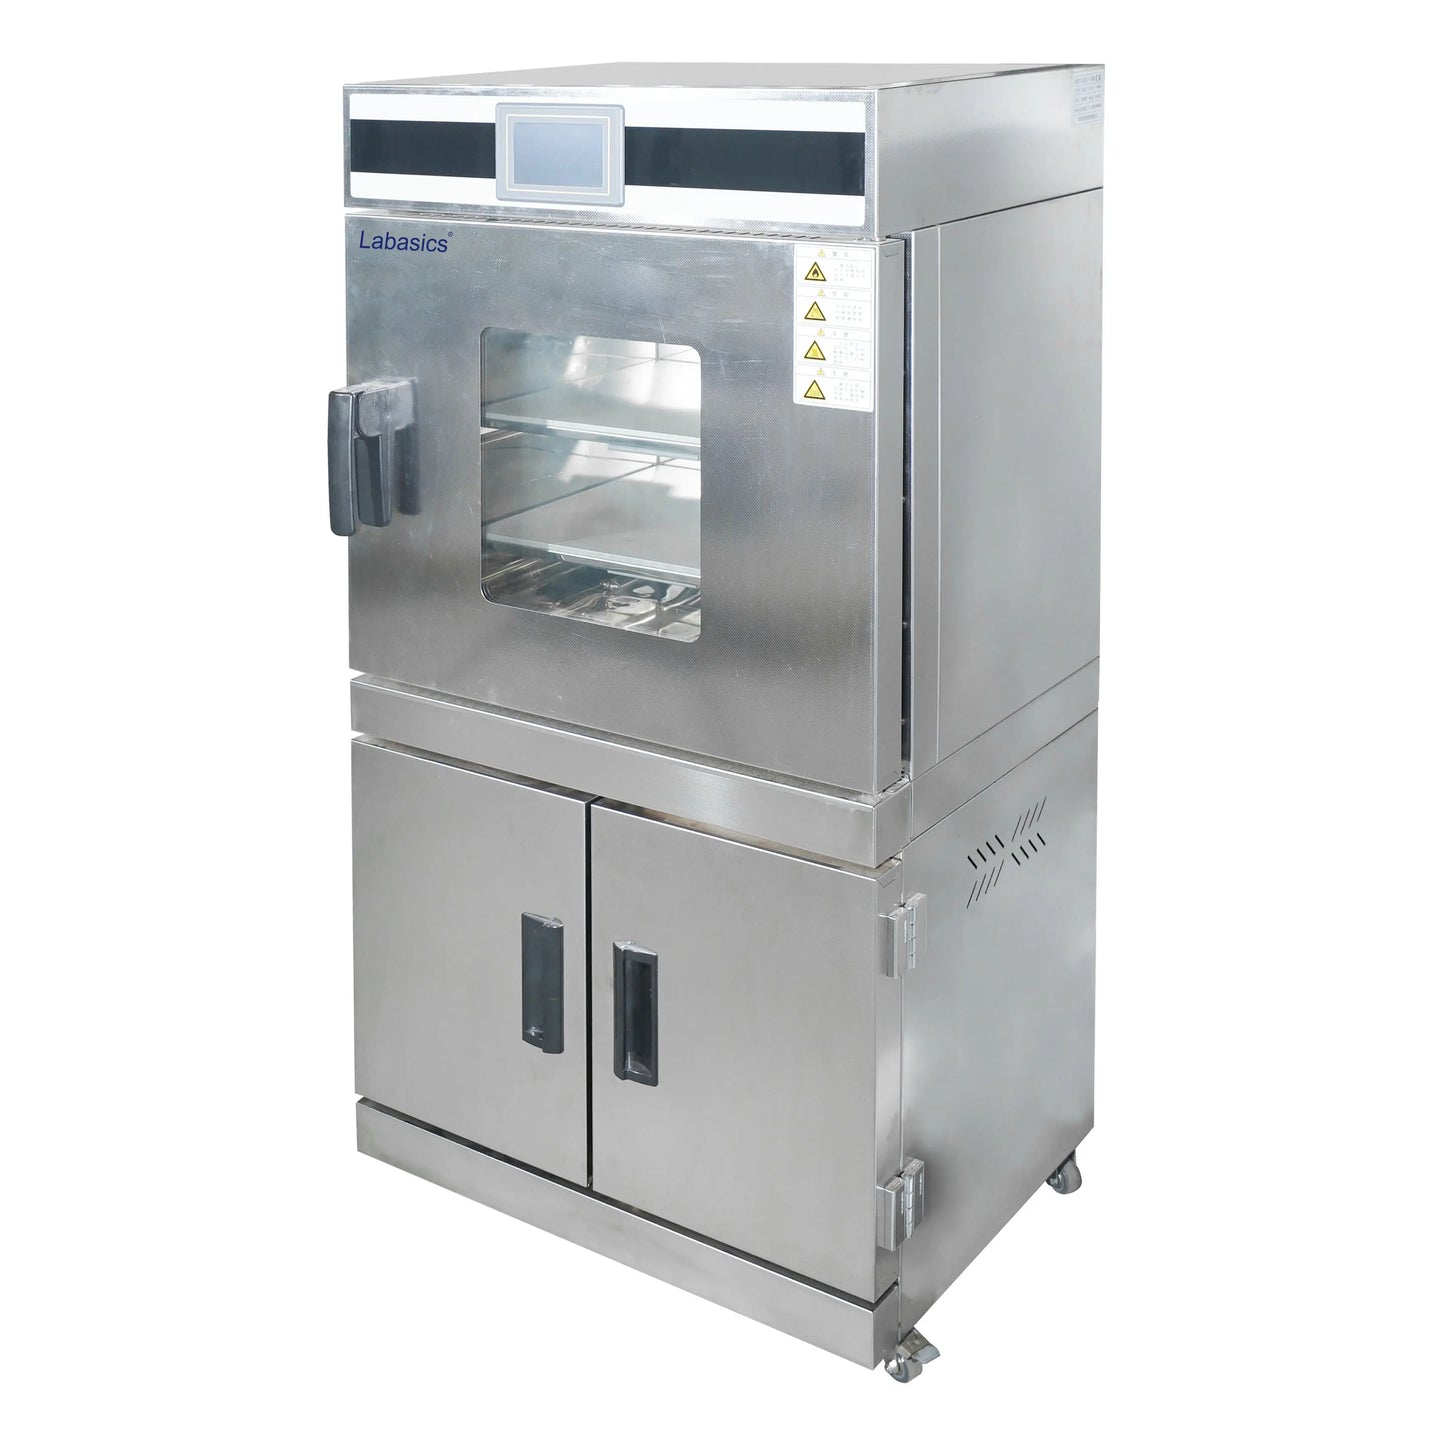 Precision Auto Vacuum Drying Oven, RT+10-250°C, 52- 214.5 L Stainless Steel Vacuum Chamber Labasics